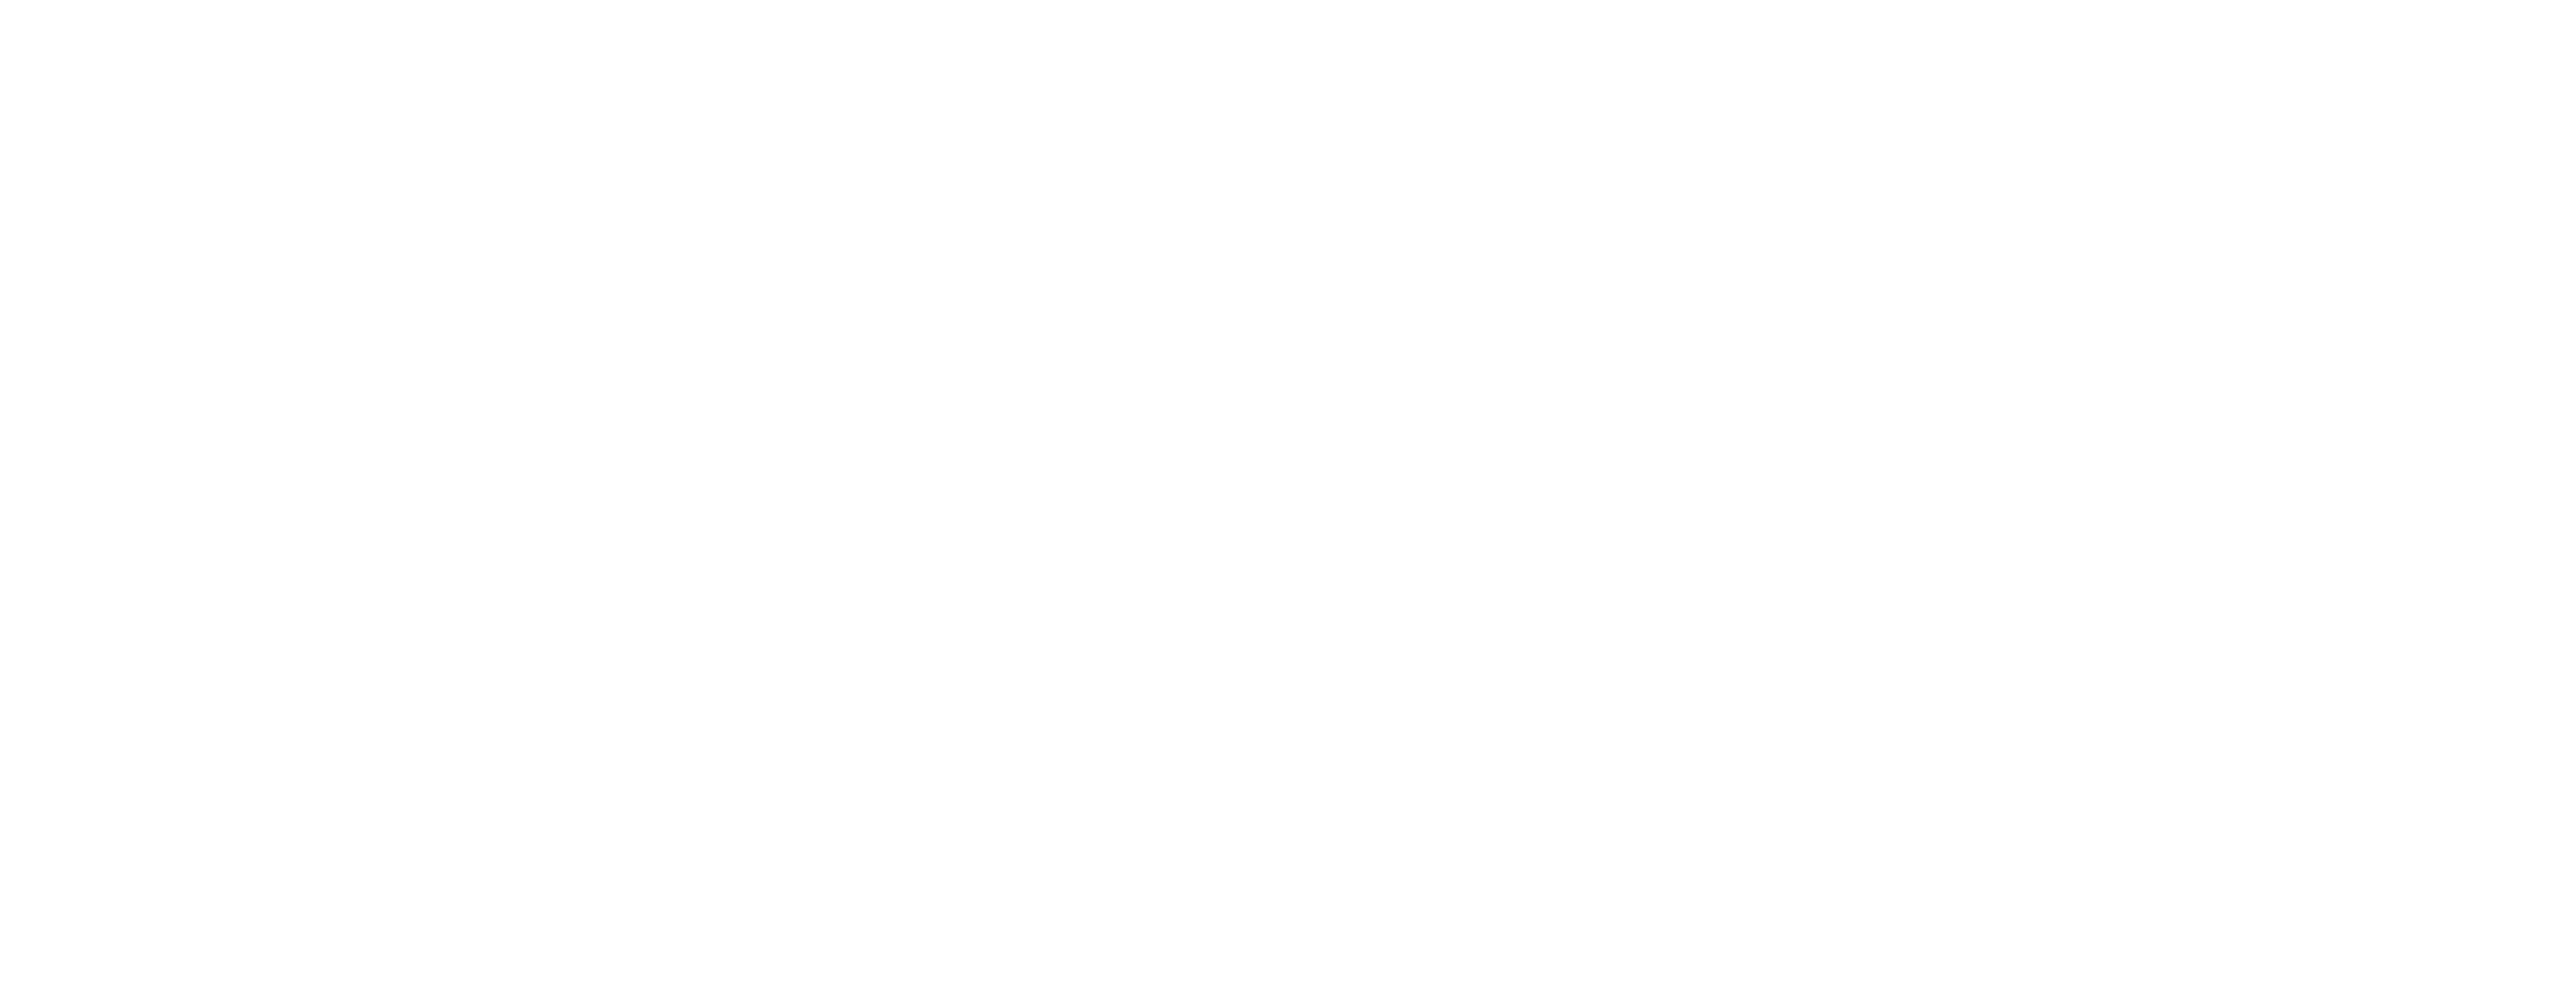 1798group logo